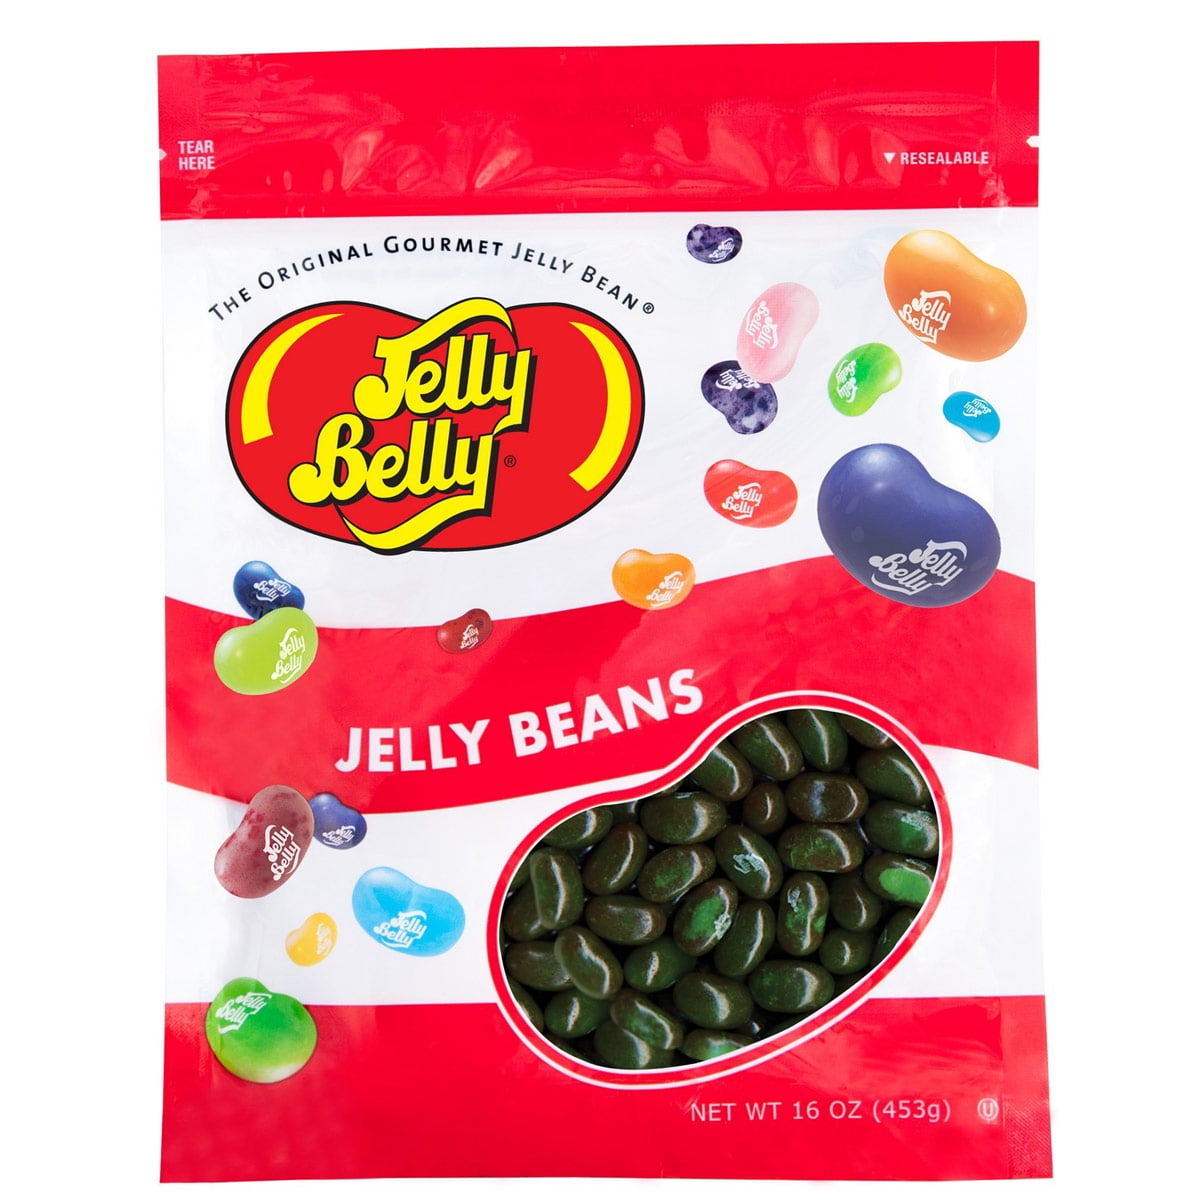 1 Pound 16 Ounces Jelly Belly Licorice Bridge Mix Resealable Bag Genuine,